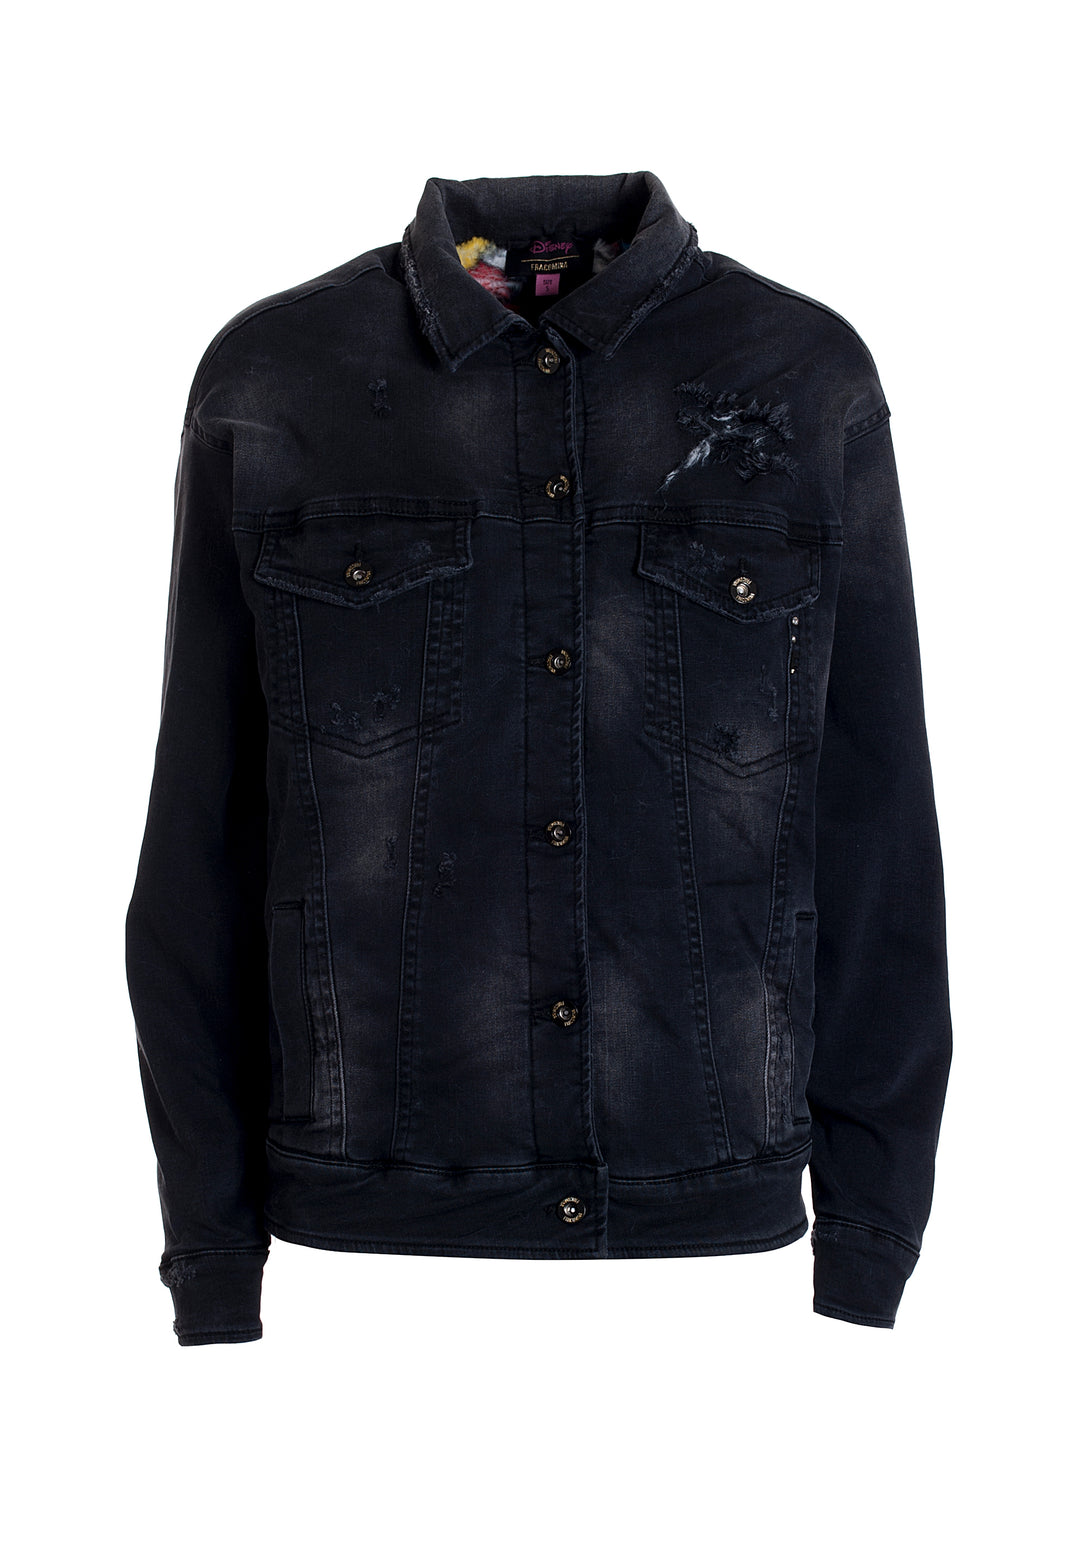 Jacket over fit made in black denim with dark wash